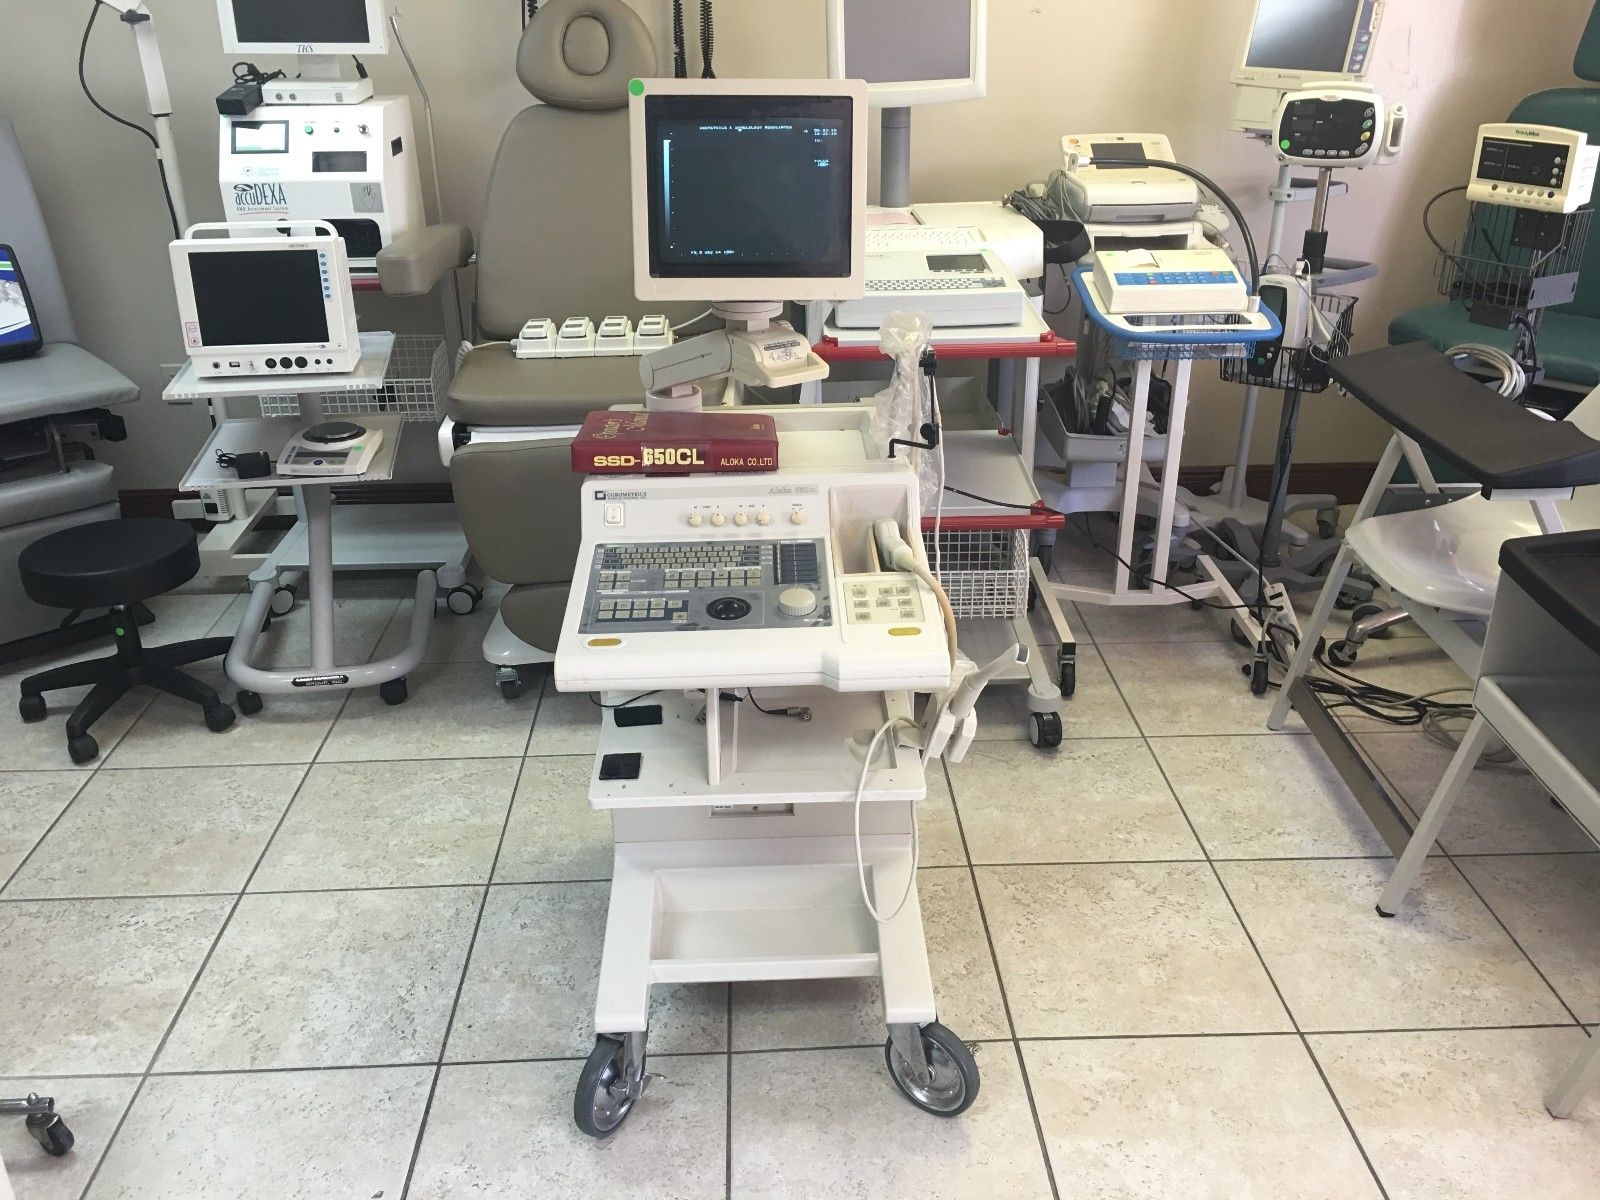 Ultrasound Diagnostic Aloka -SSD-650CL w/Probes DIAGNOSTIC ULTRASOUND MACHINES FOR SALE